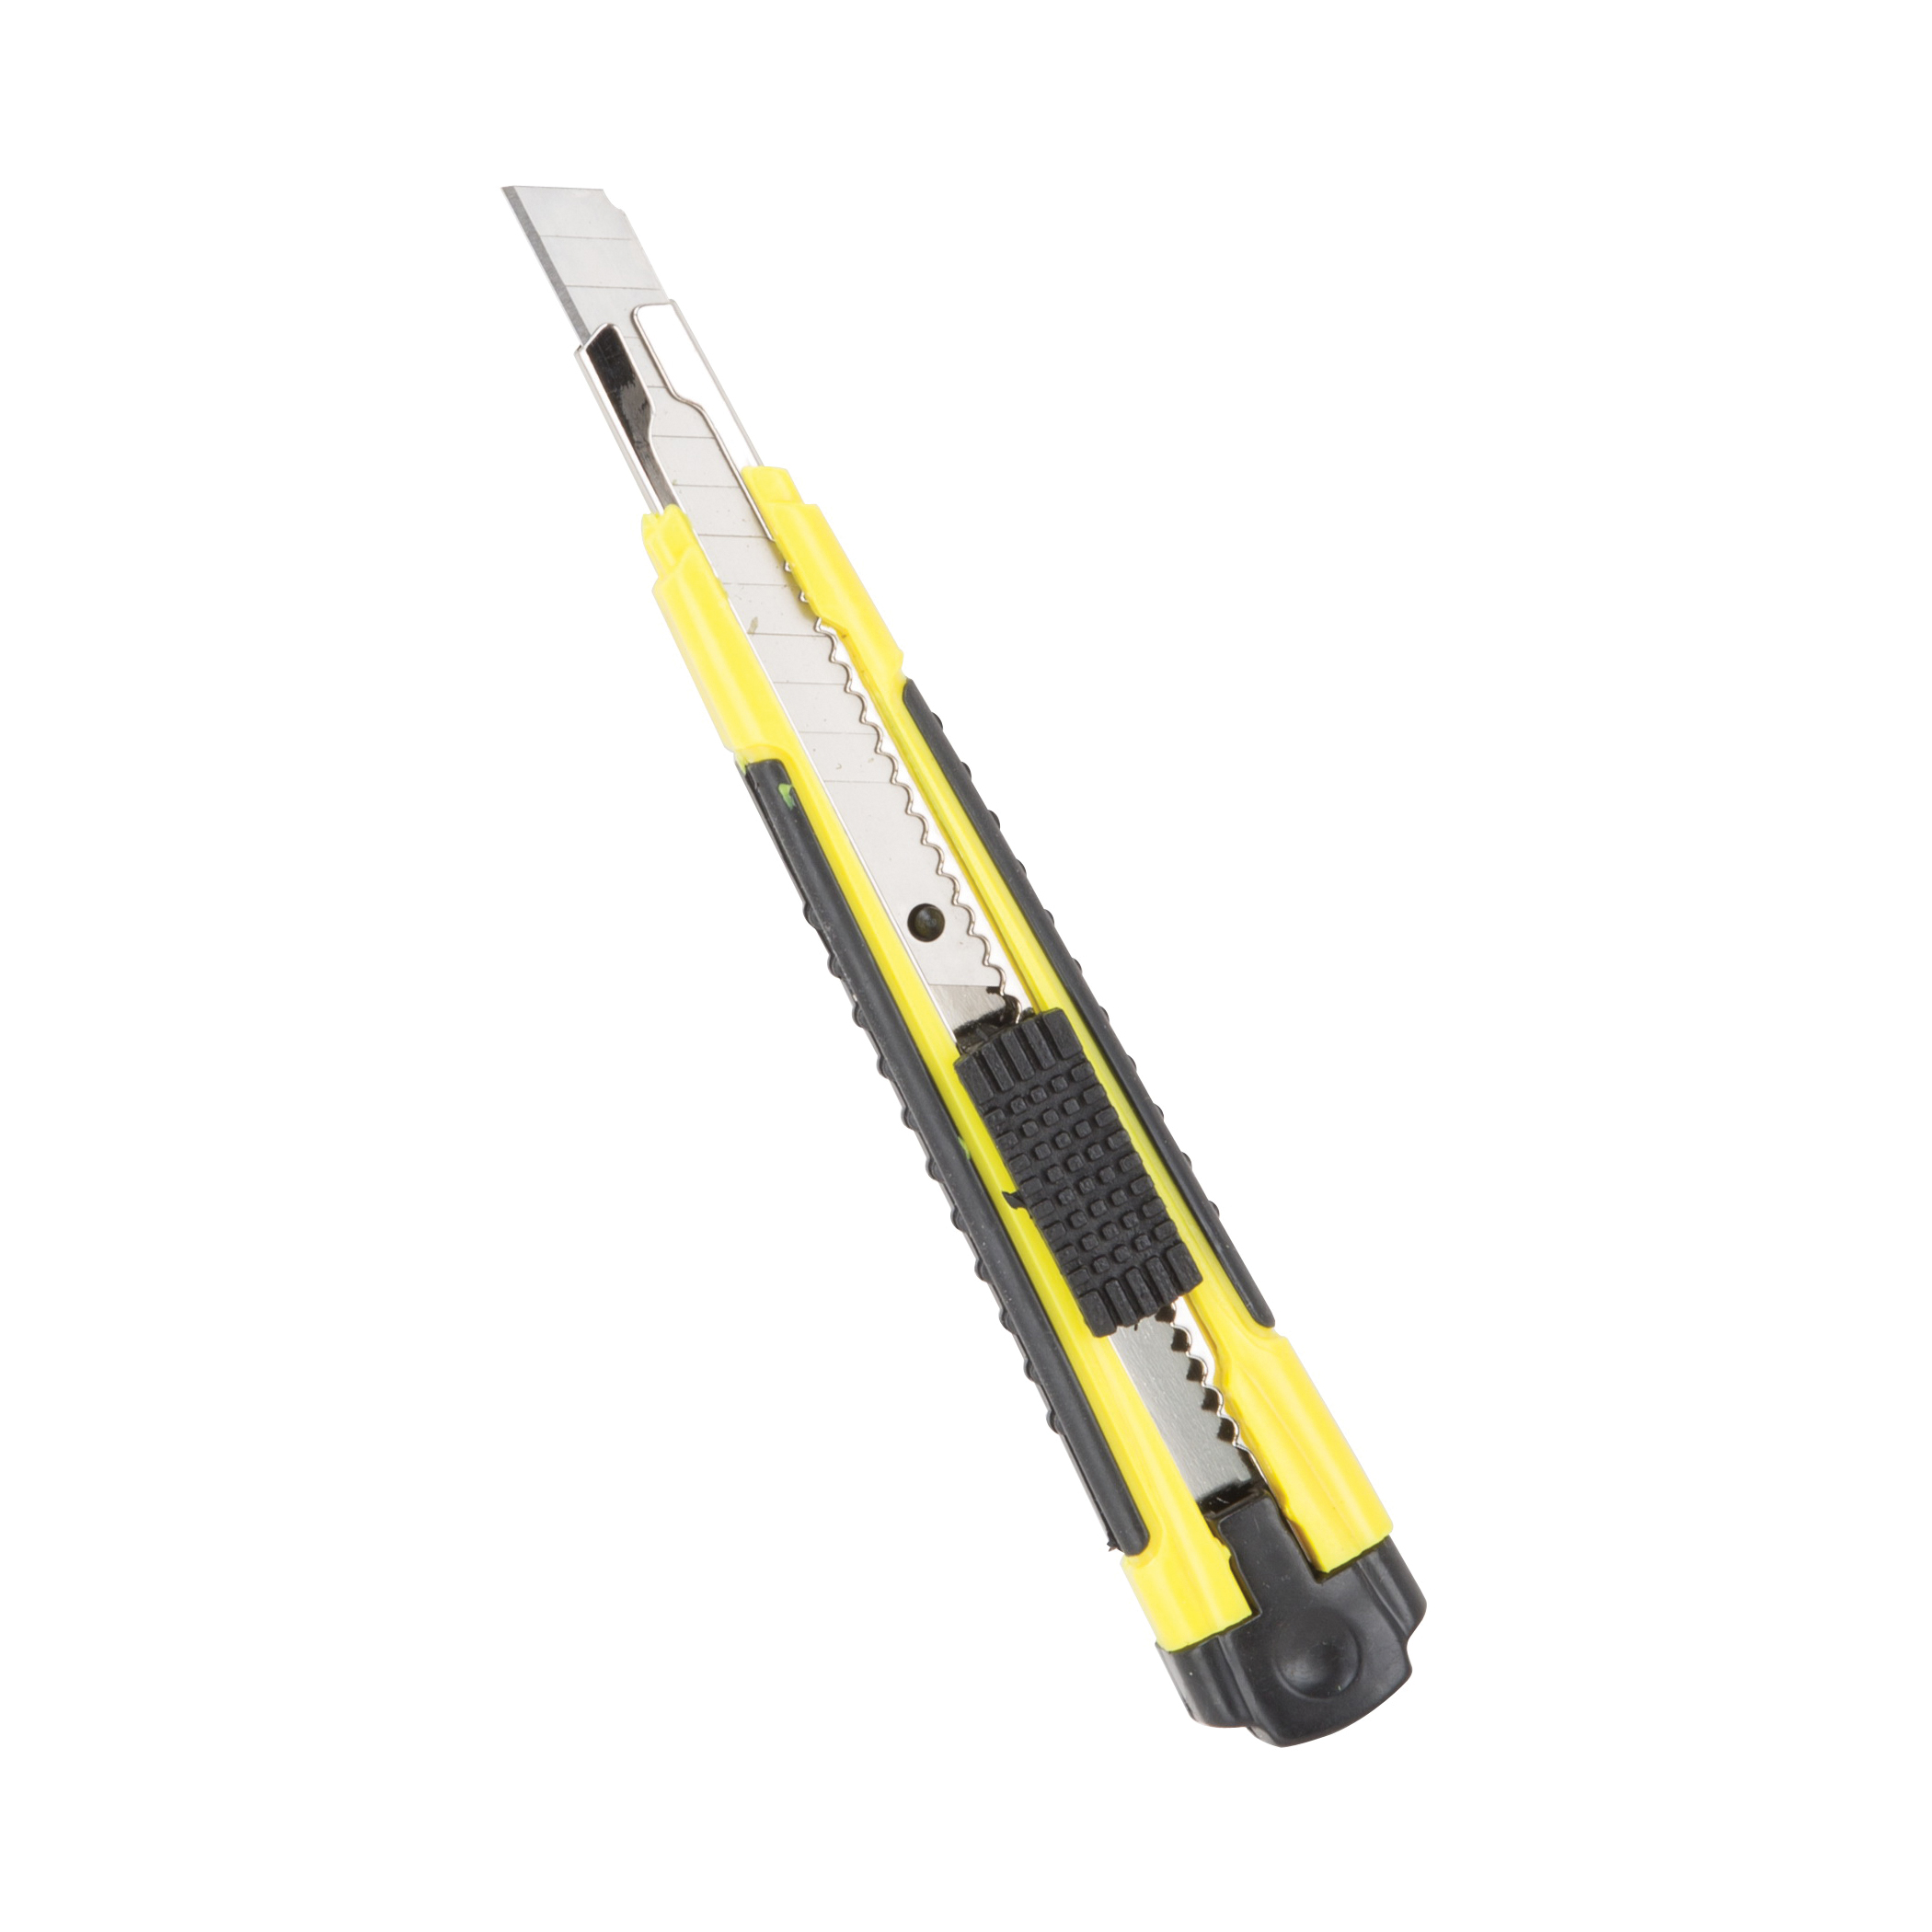 JL-VT45534 Utility Knife, 4 in L Blade, 9 mm W Blade, Alloy Steel Blade, Soft-Grip Handle